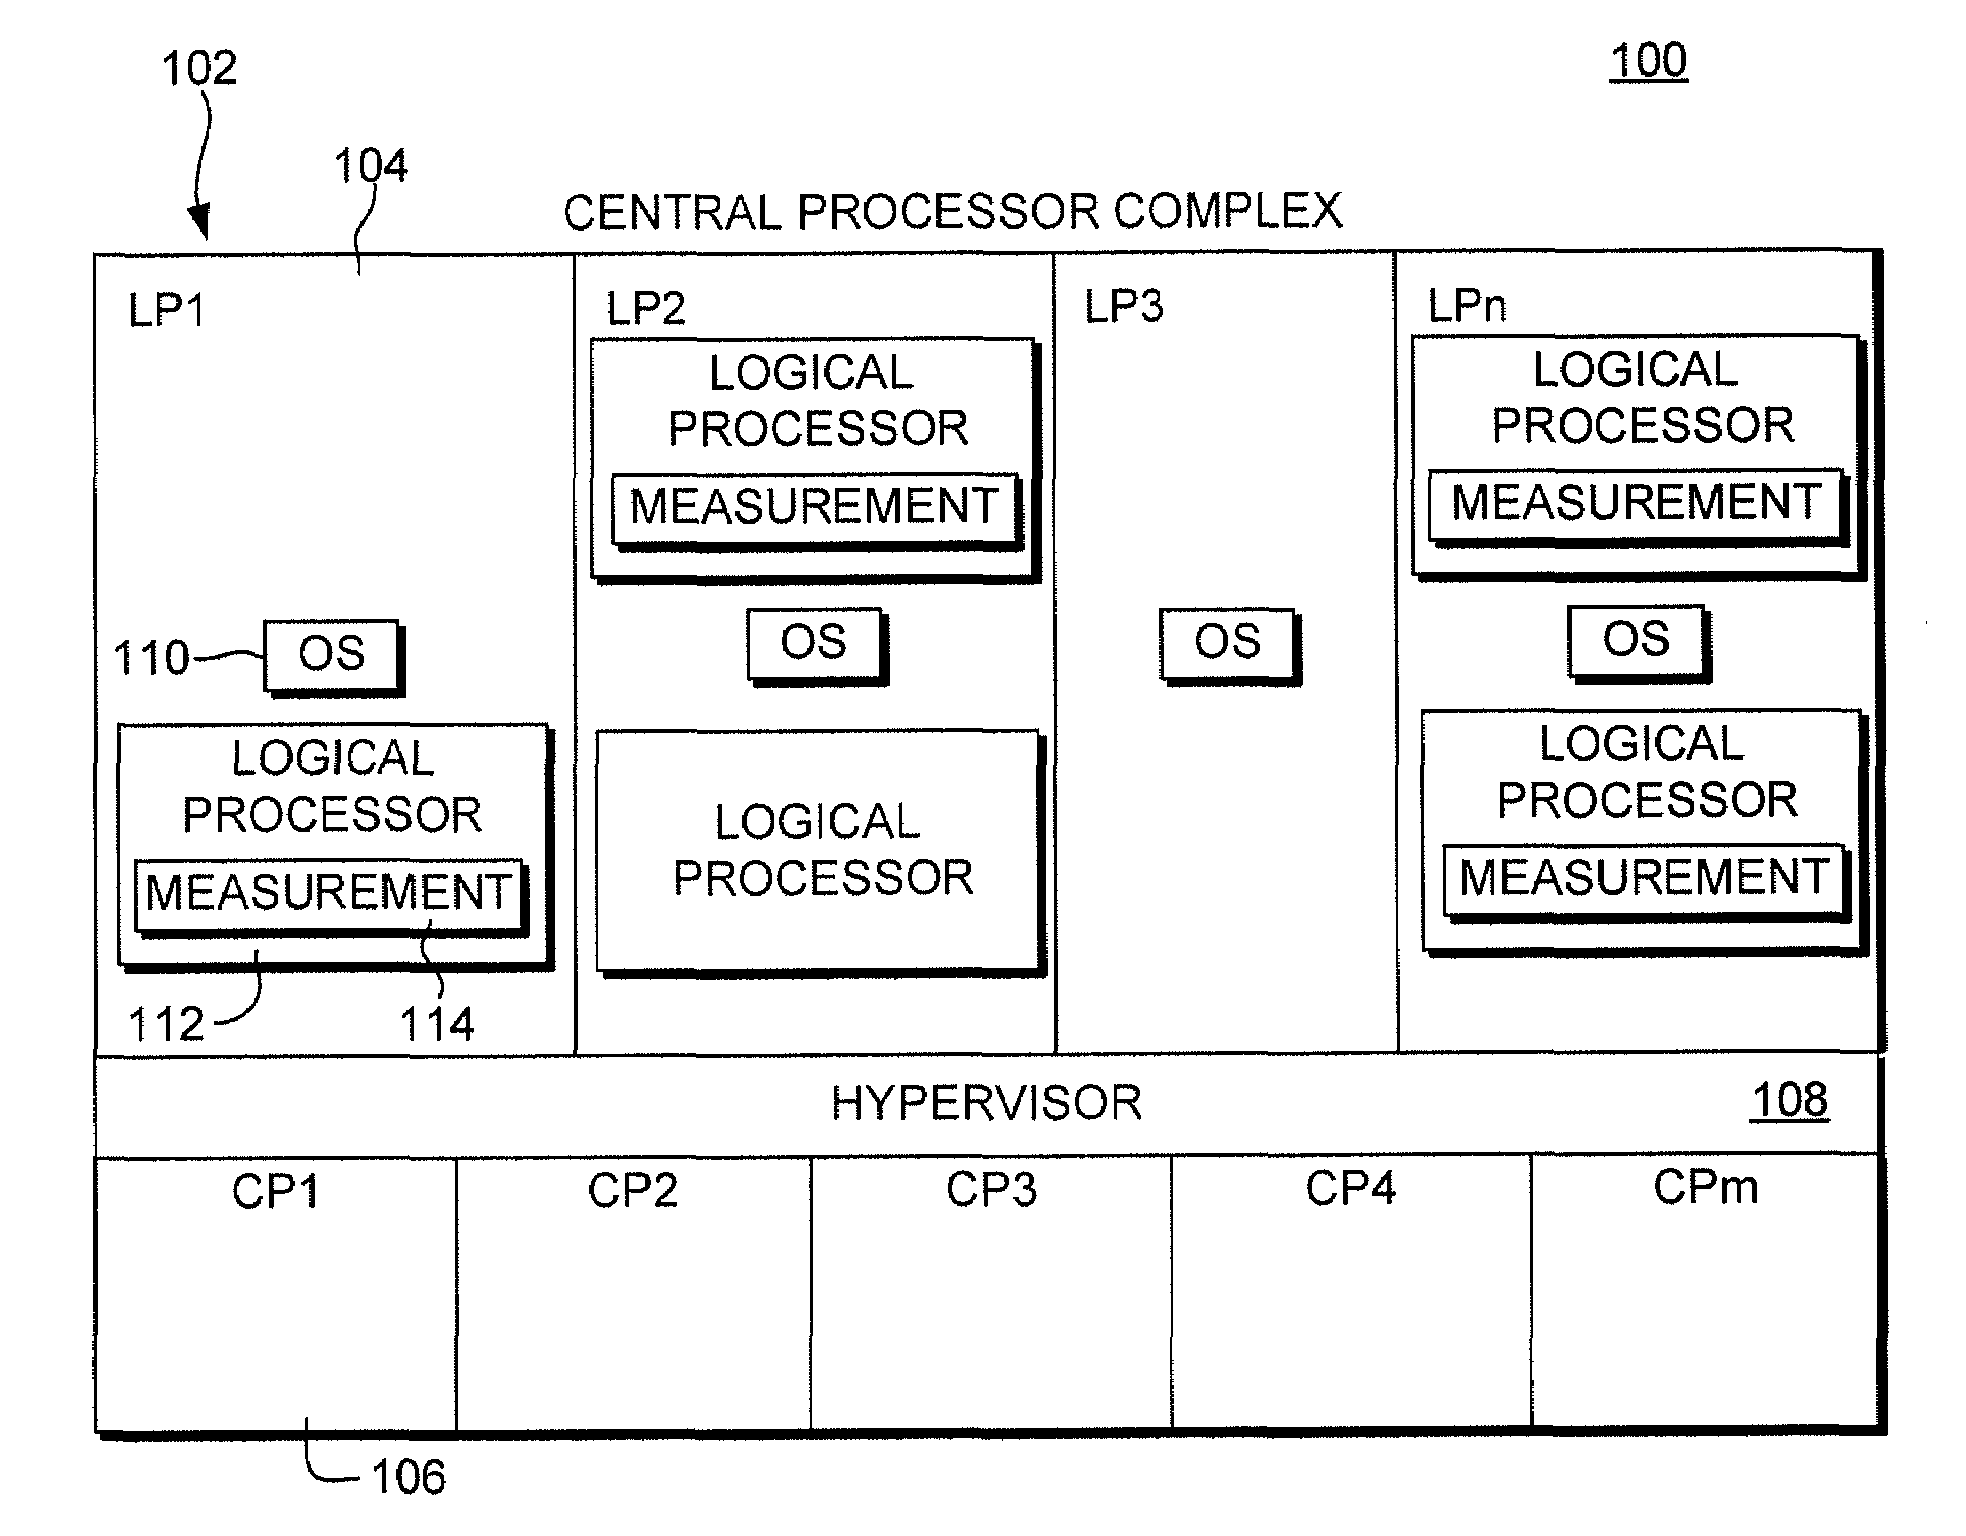 Virtualization of a central processing unit measurement facility